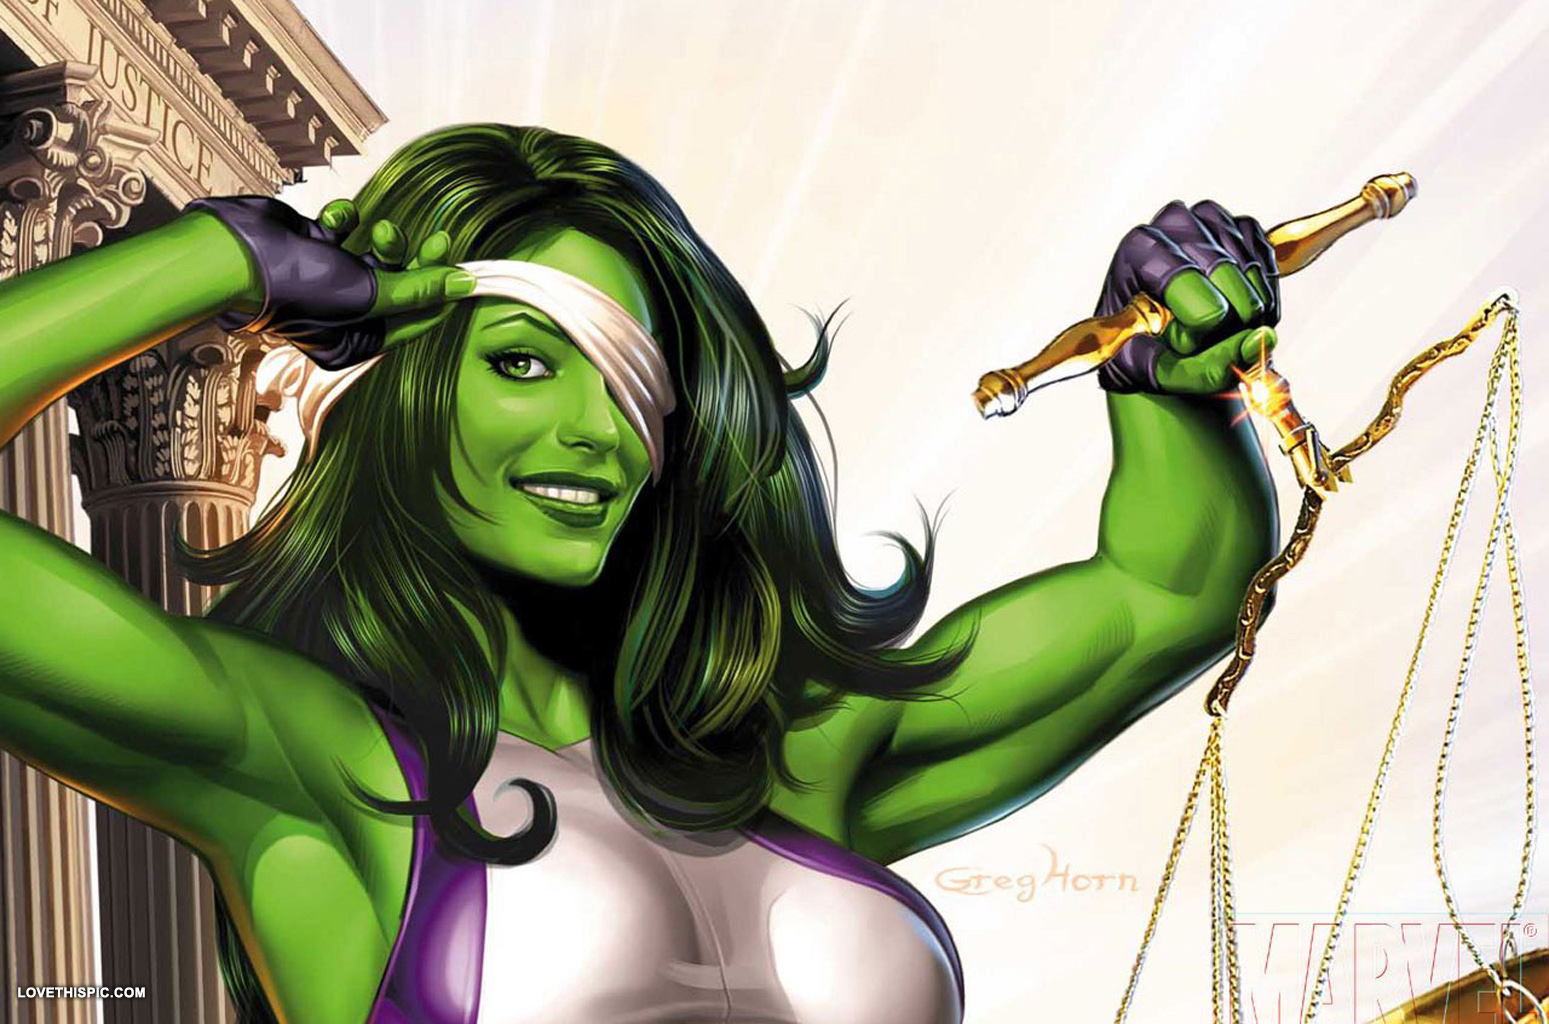 High Resolution Wallpaper | She-Hulk 1549x1024 px